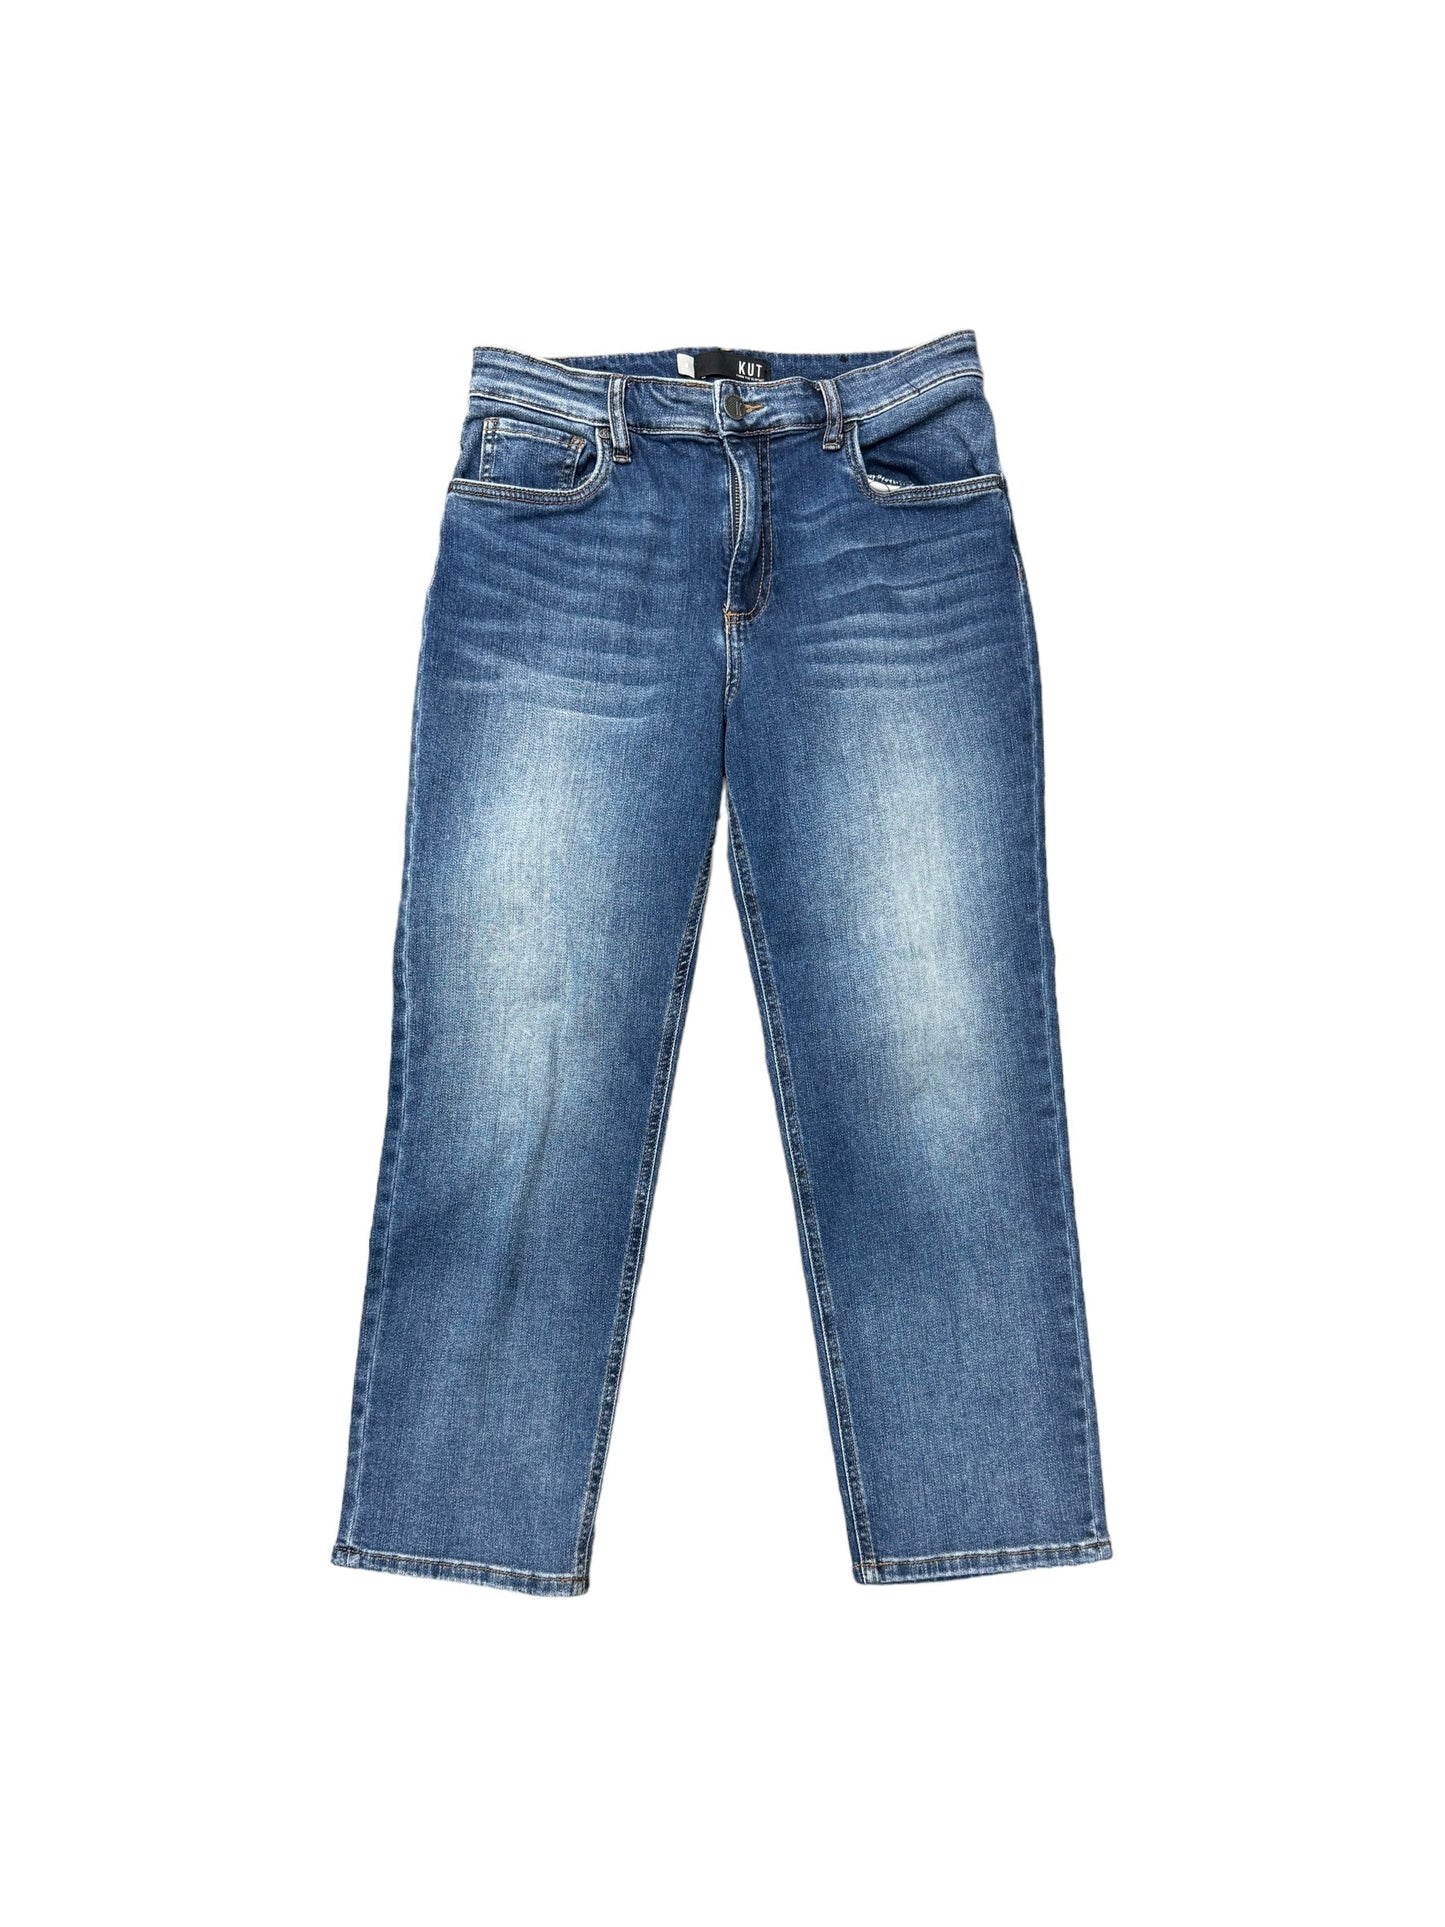 Blue Denim Jeans Cropped Kut, Size 8